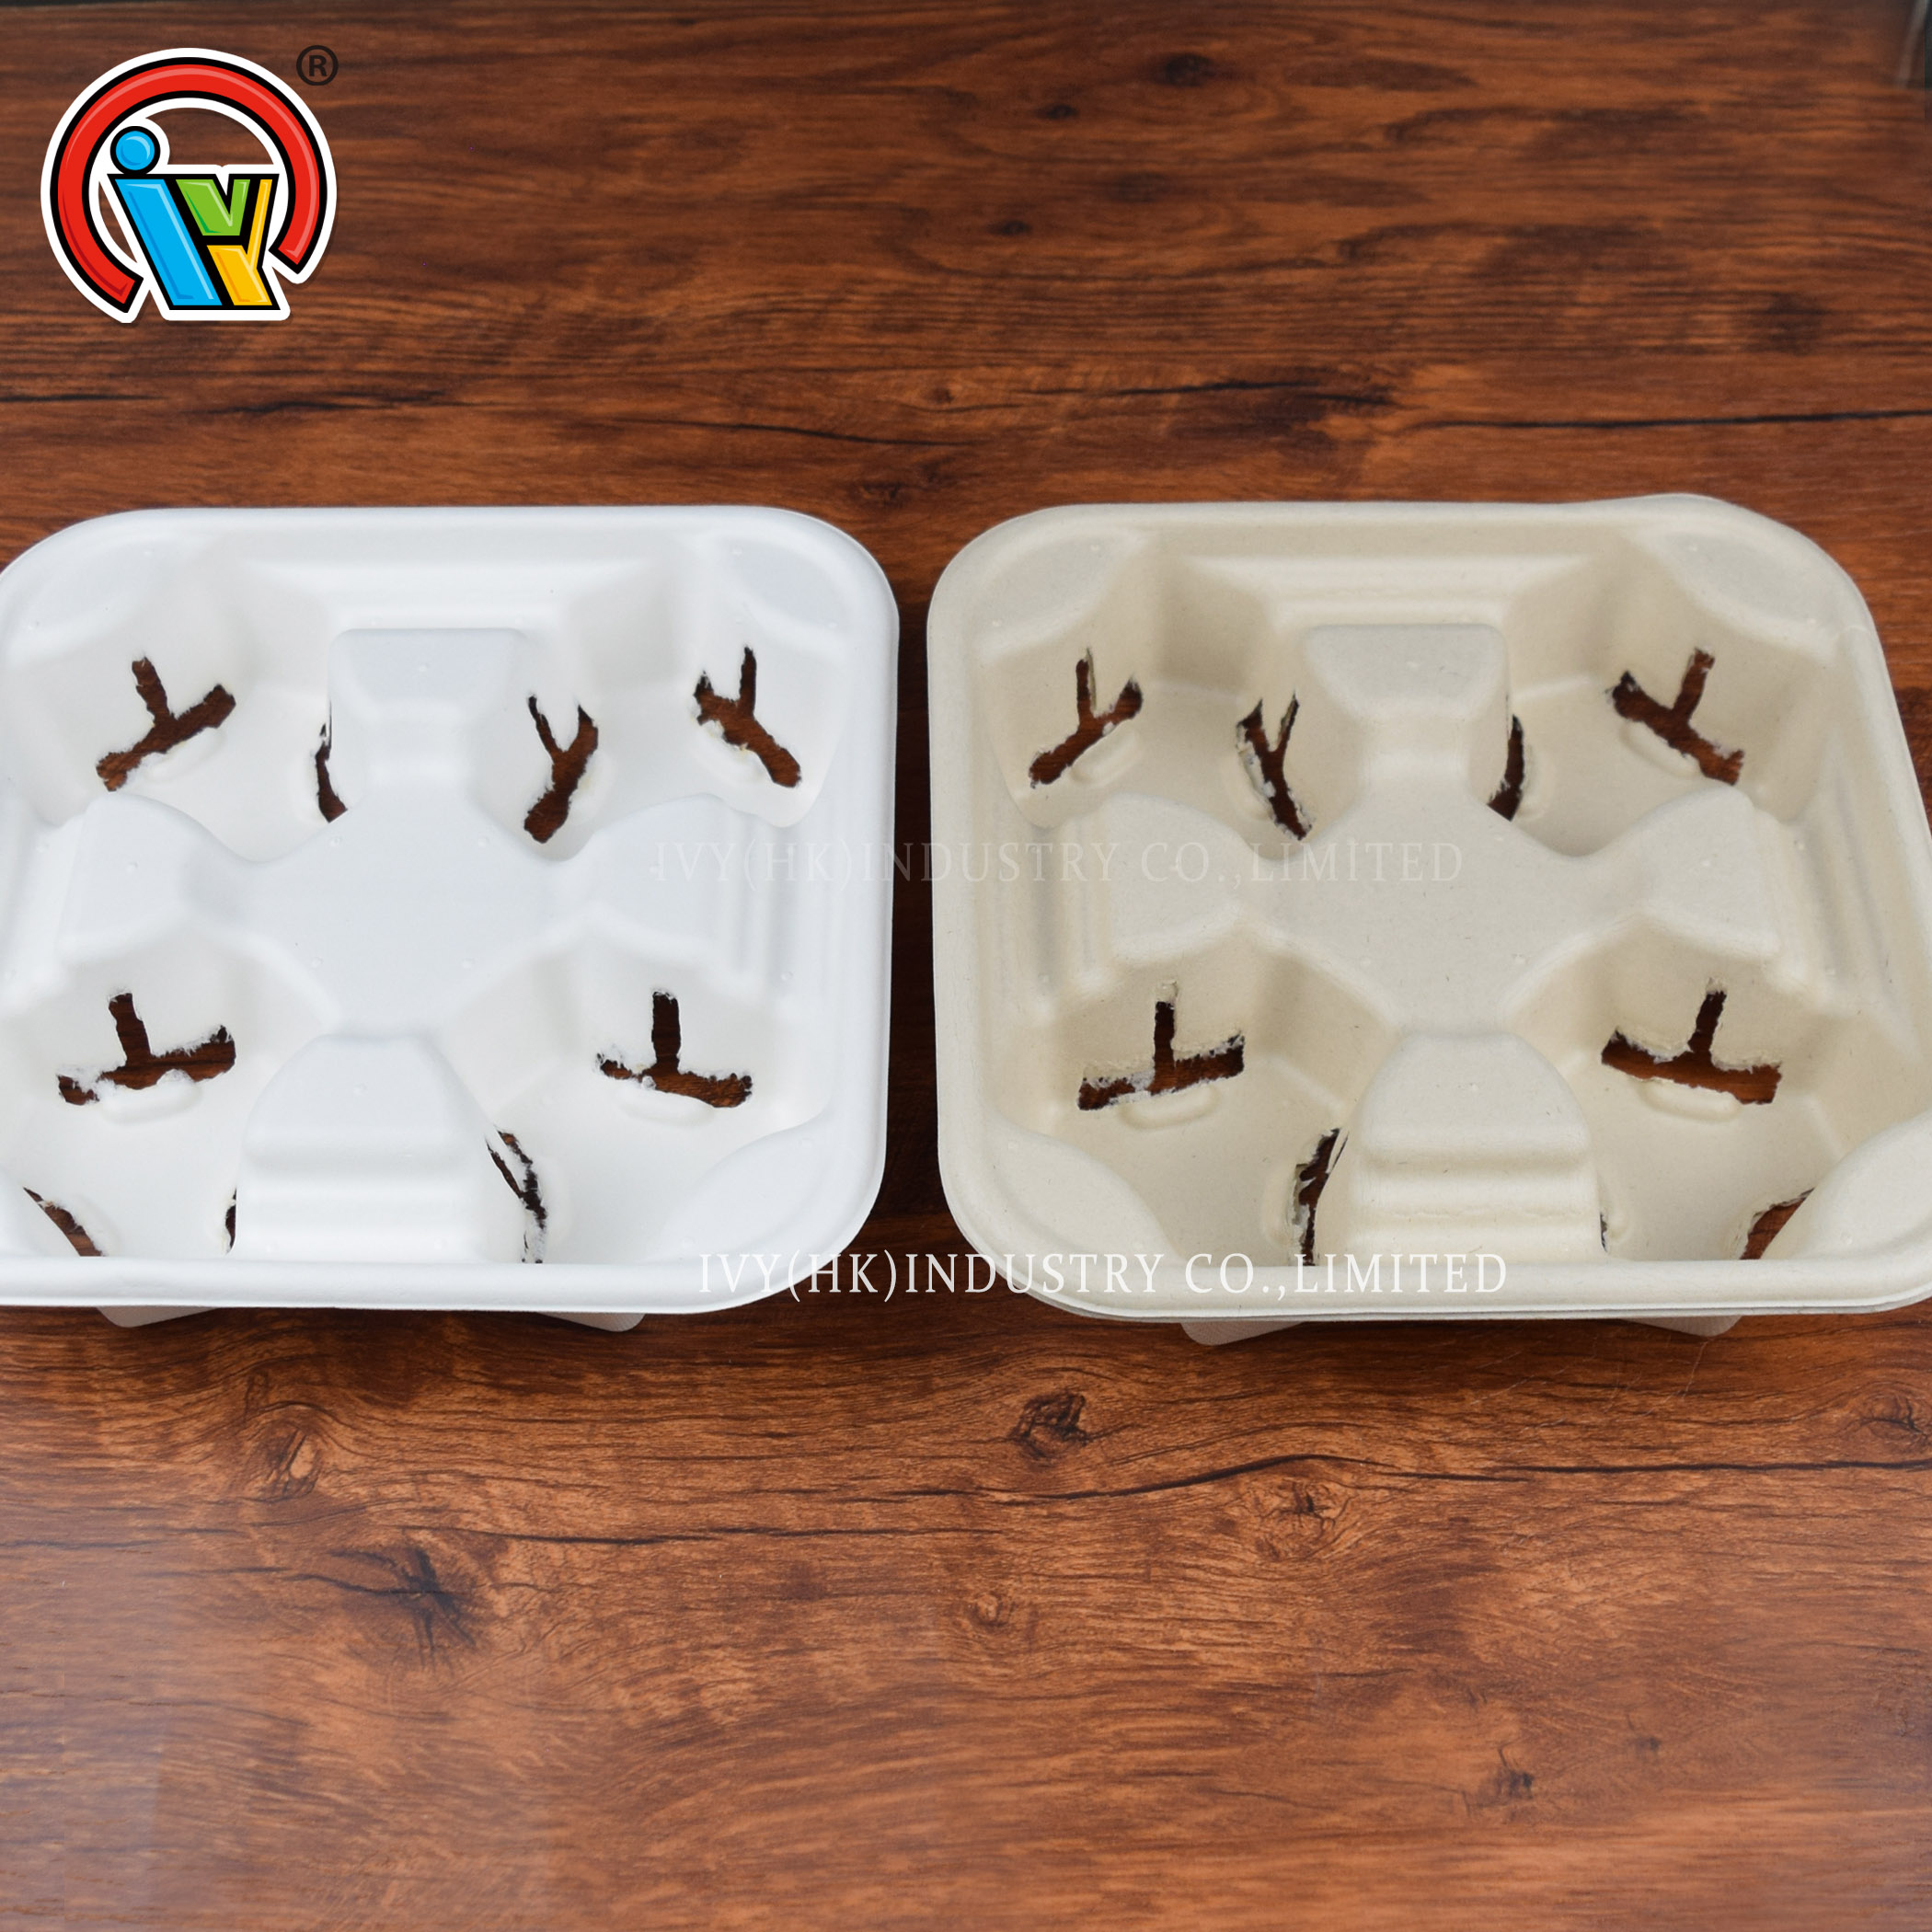 biodegradable cup holder carrier tray manufacturer